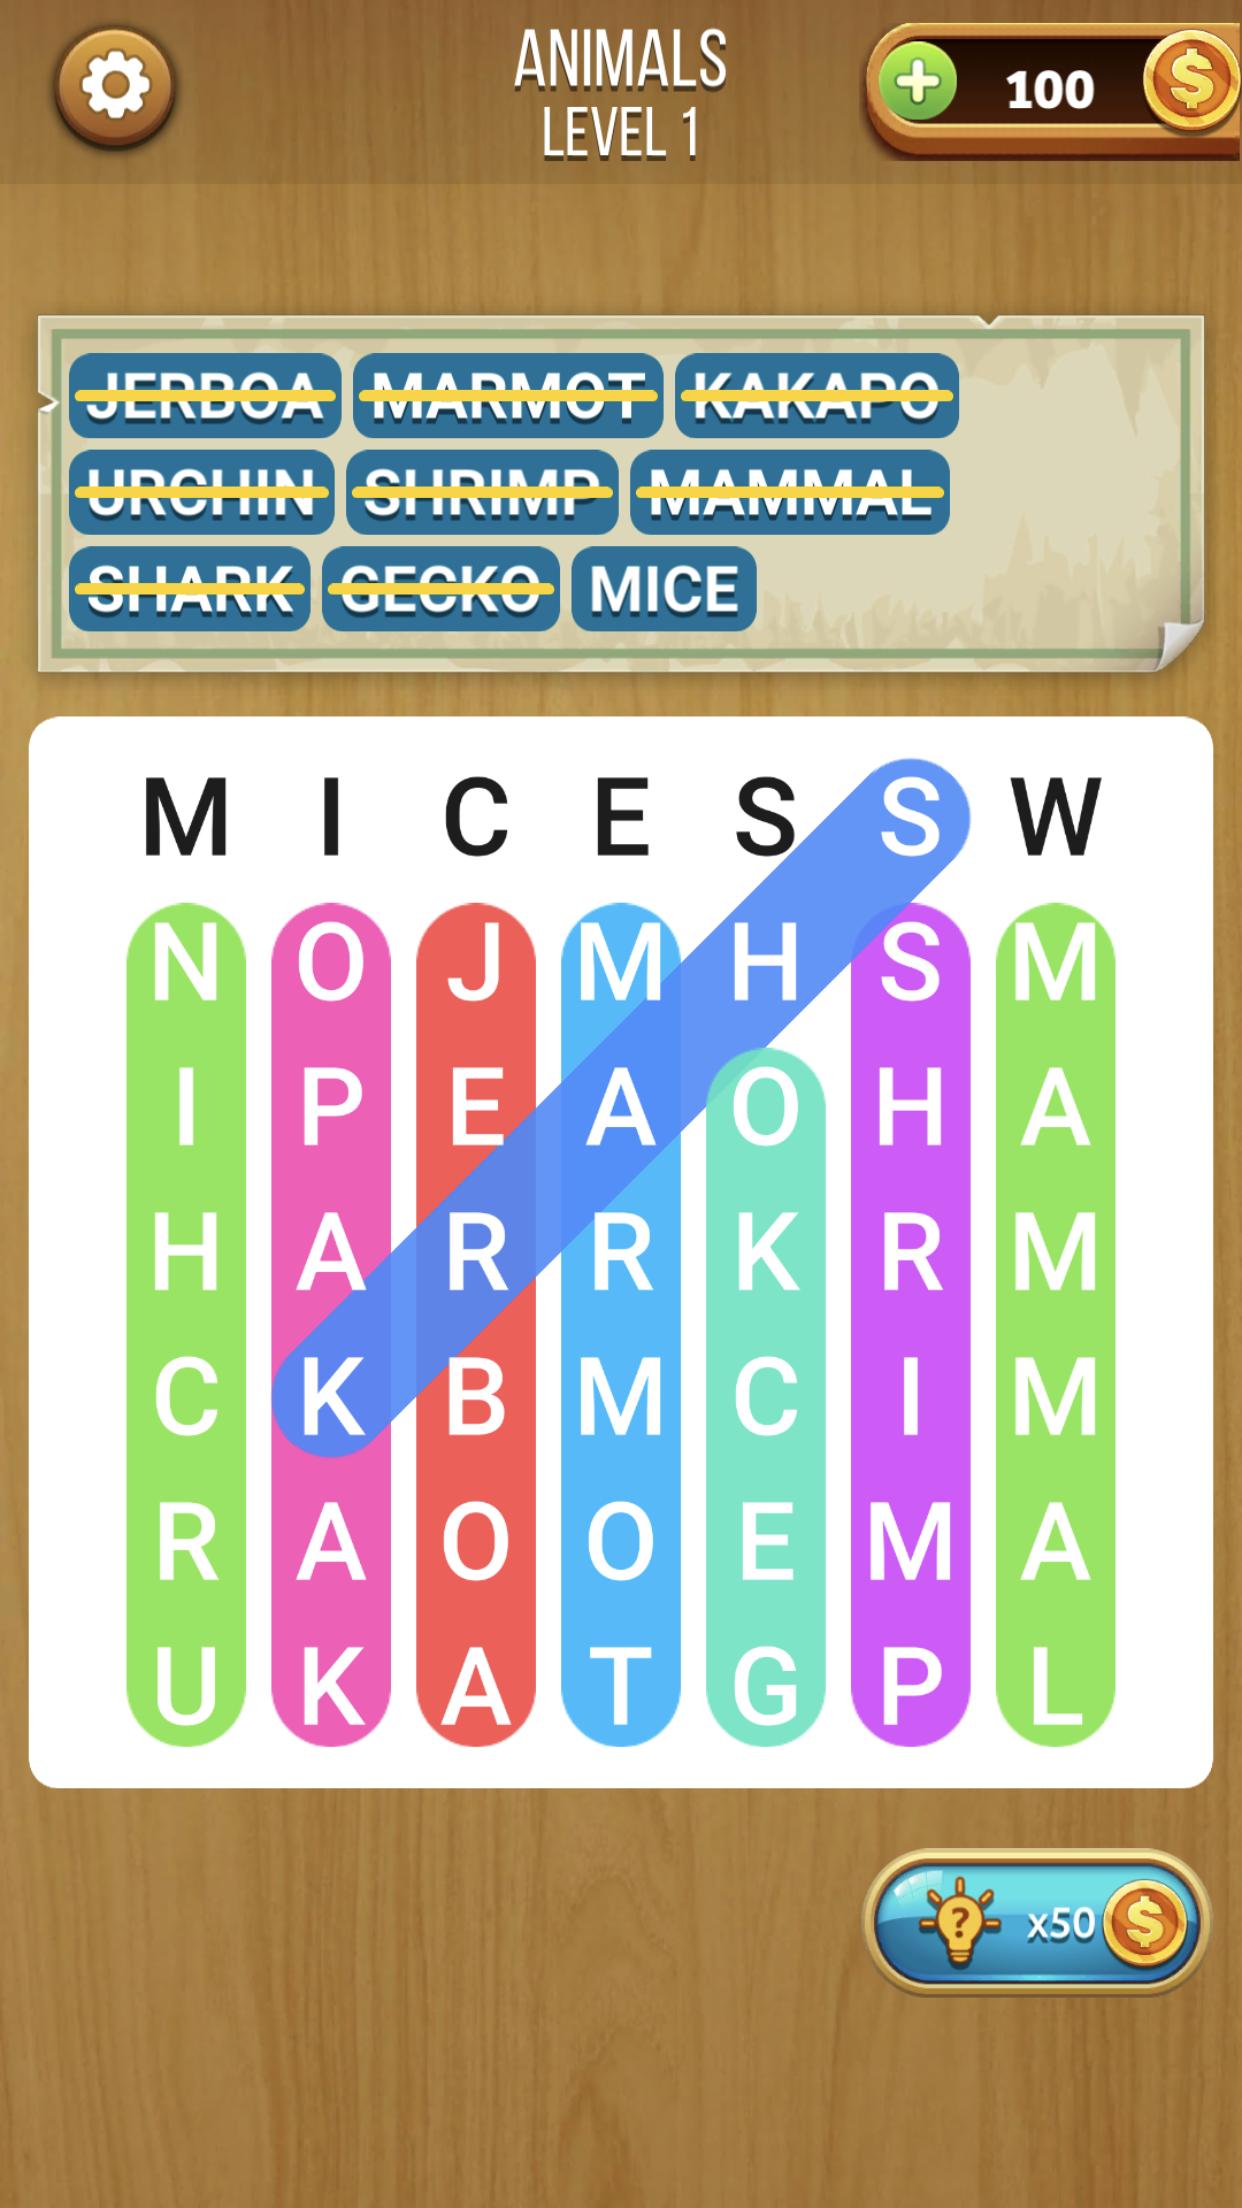 Hidden Words Word Search CrossWord Fun Game 1.0.1 Screenshot 1